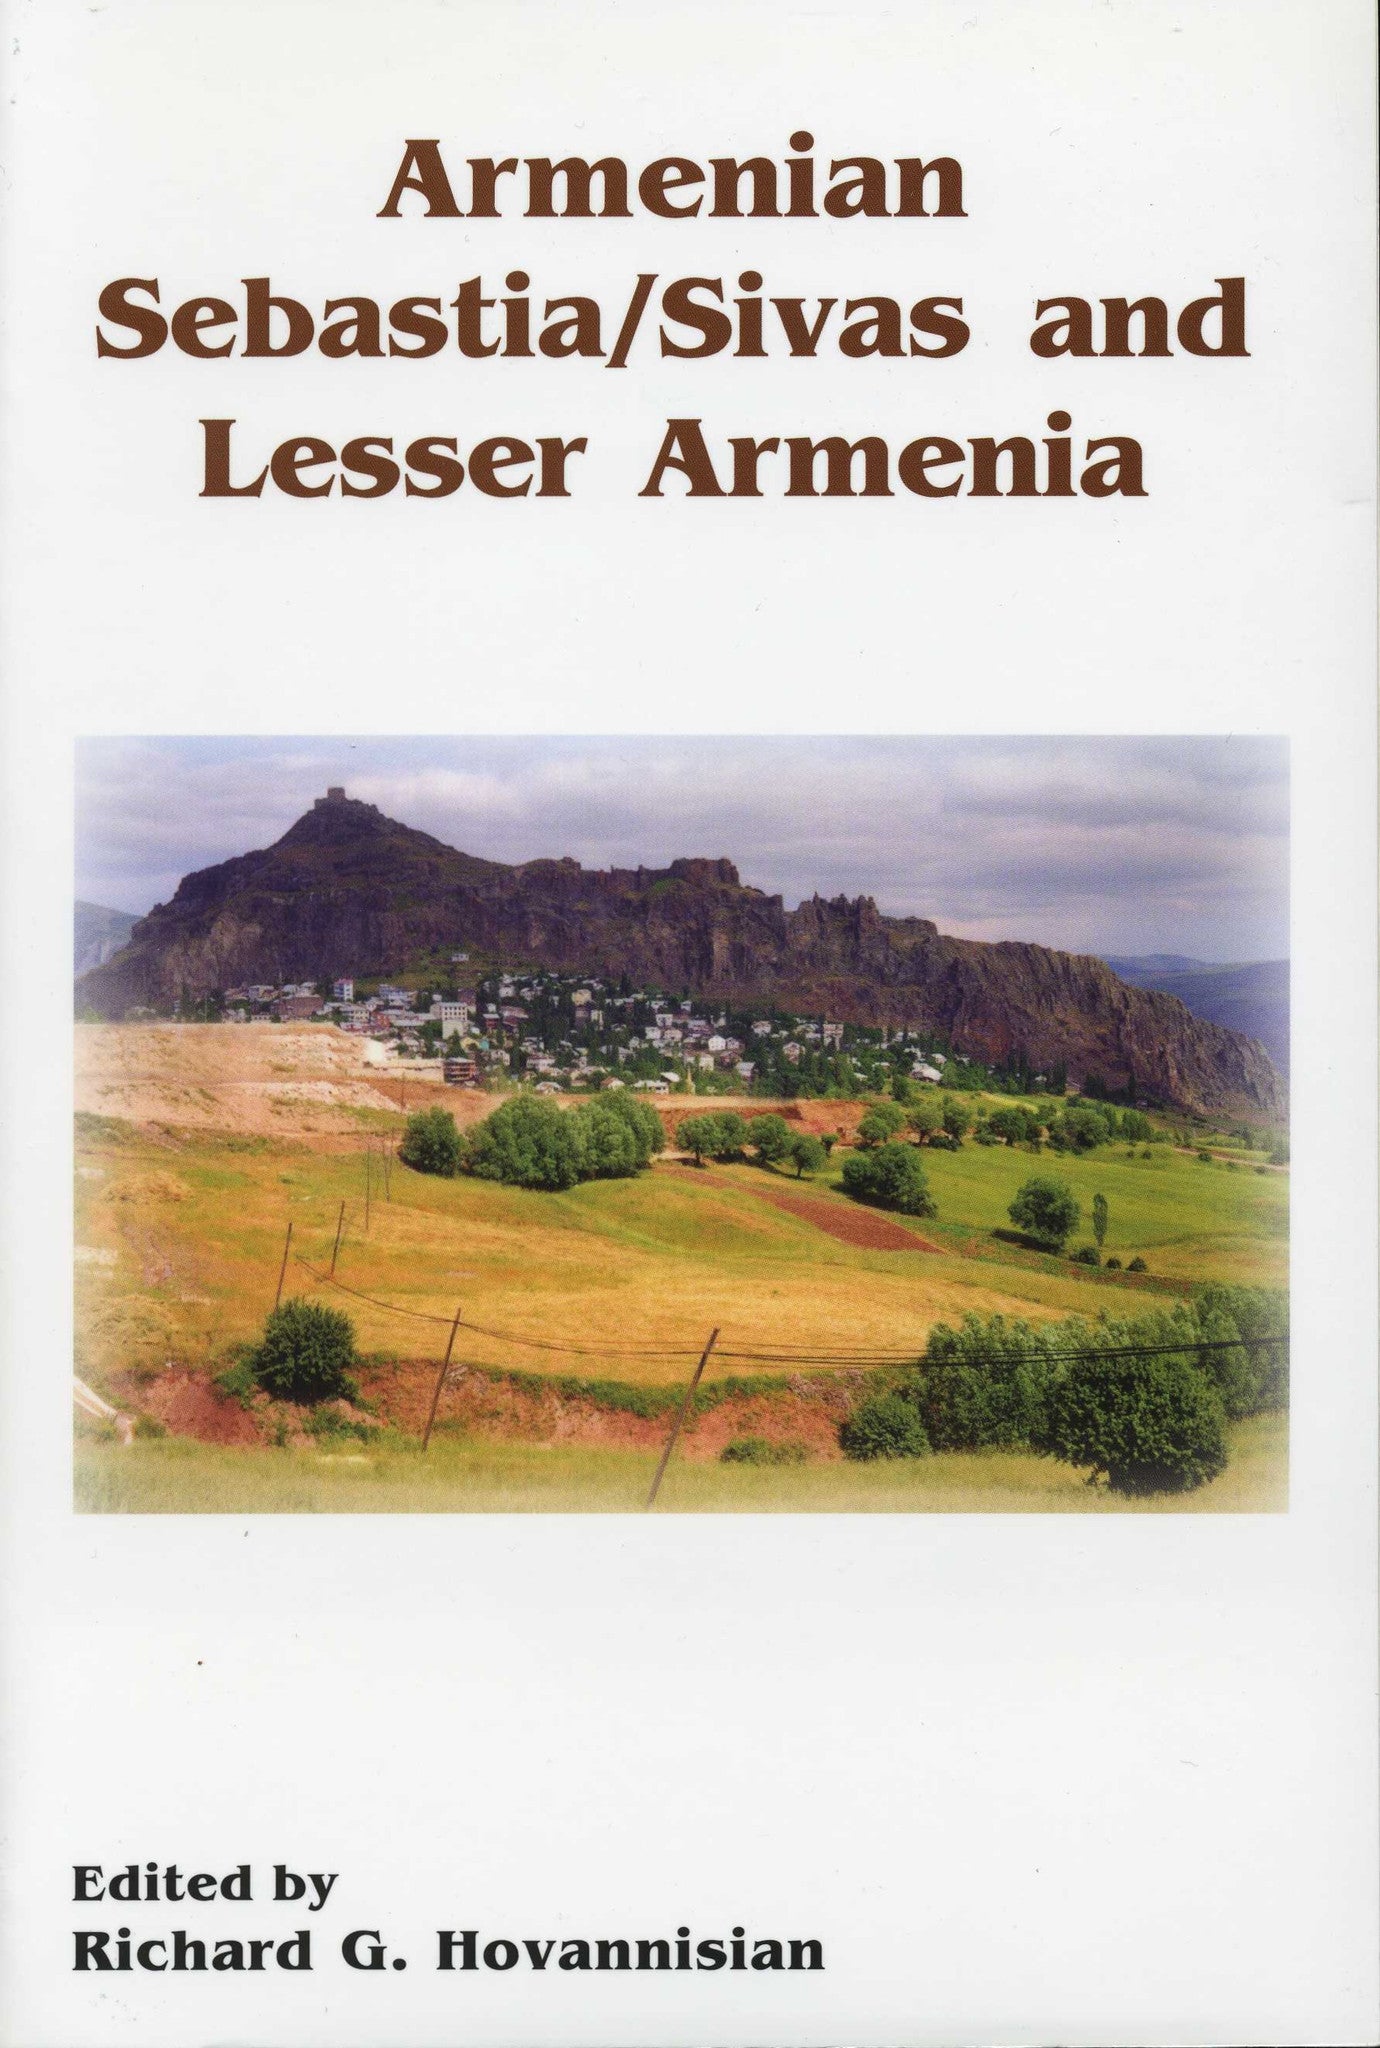 ARMENIAN SEBASTIA: Sivas and Lesser Armenia